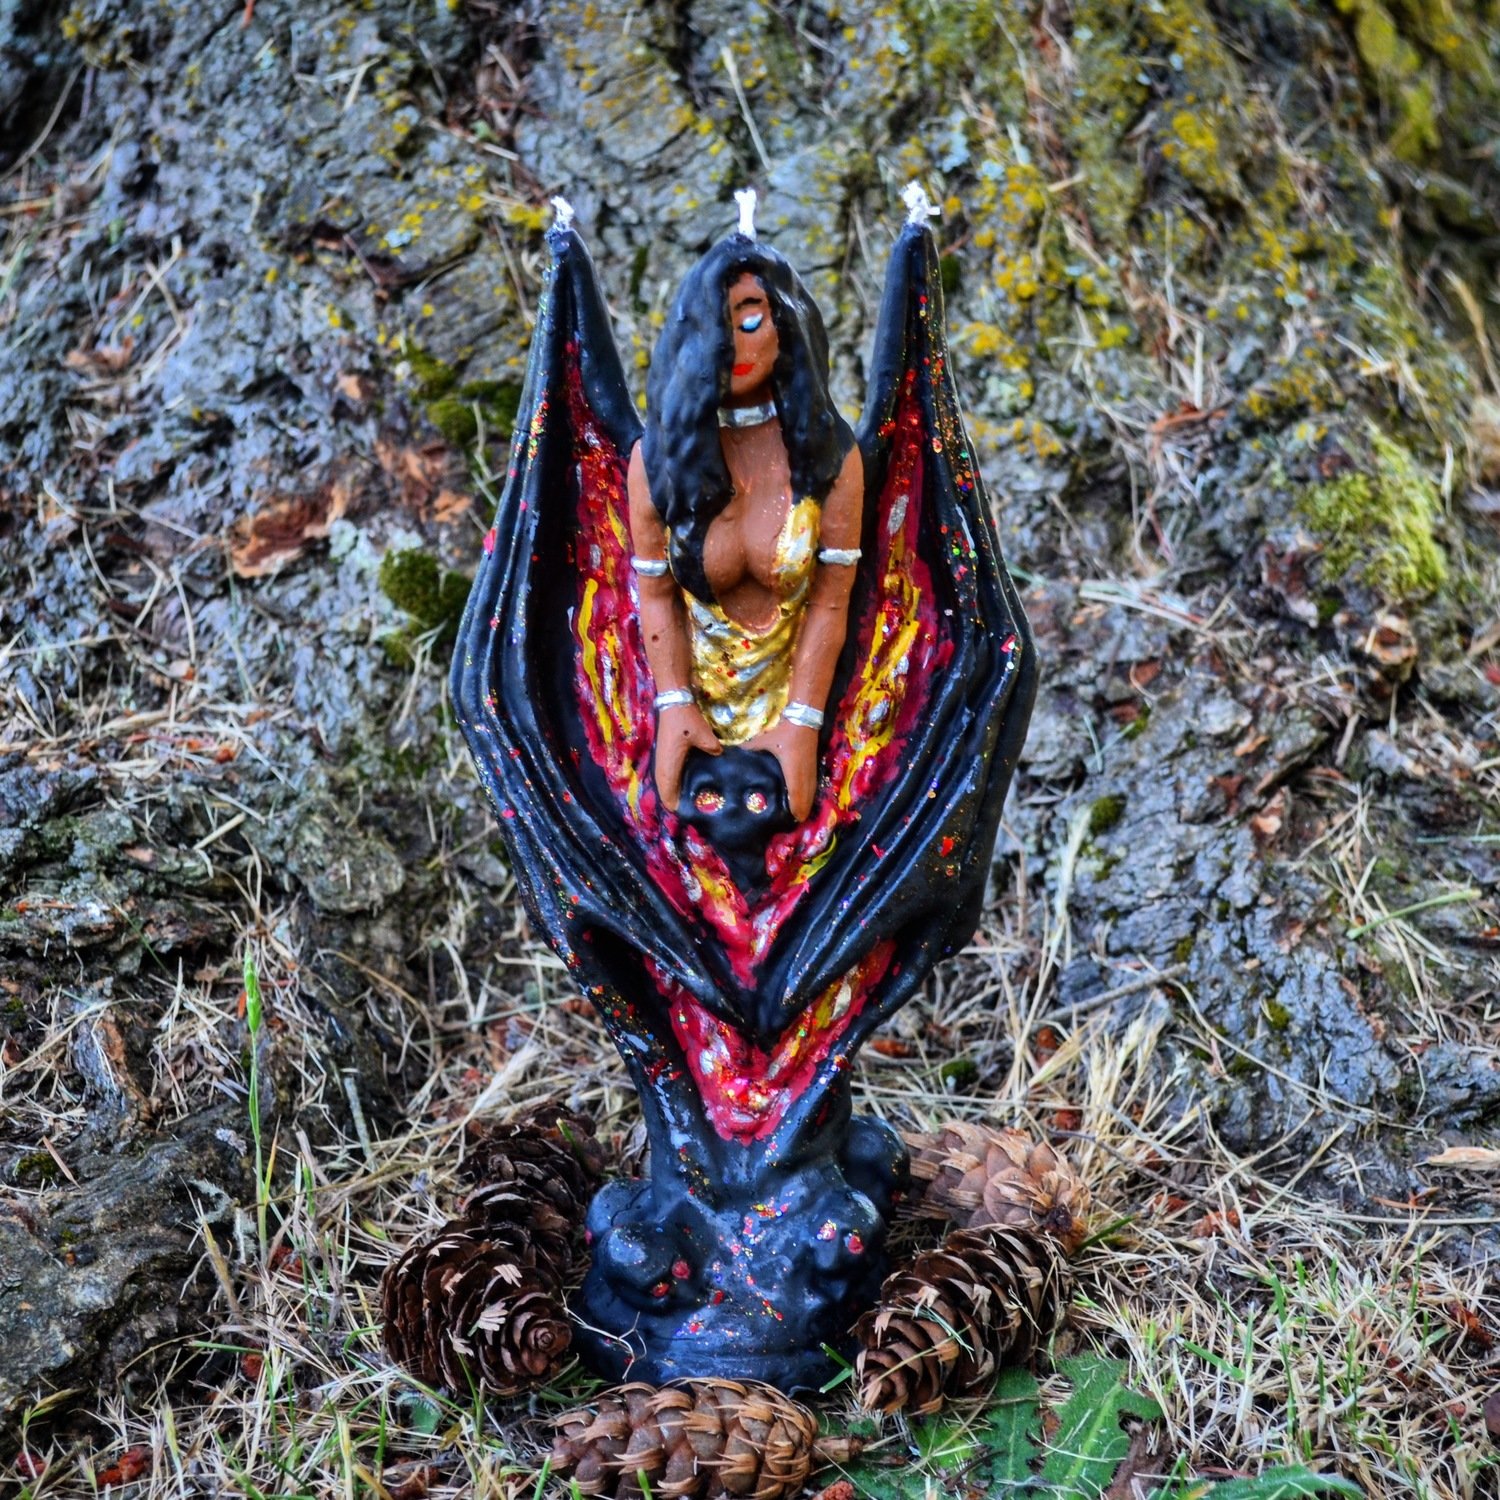 The Lady Pomba Gira / Witch